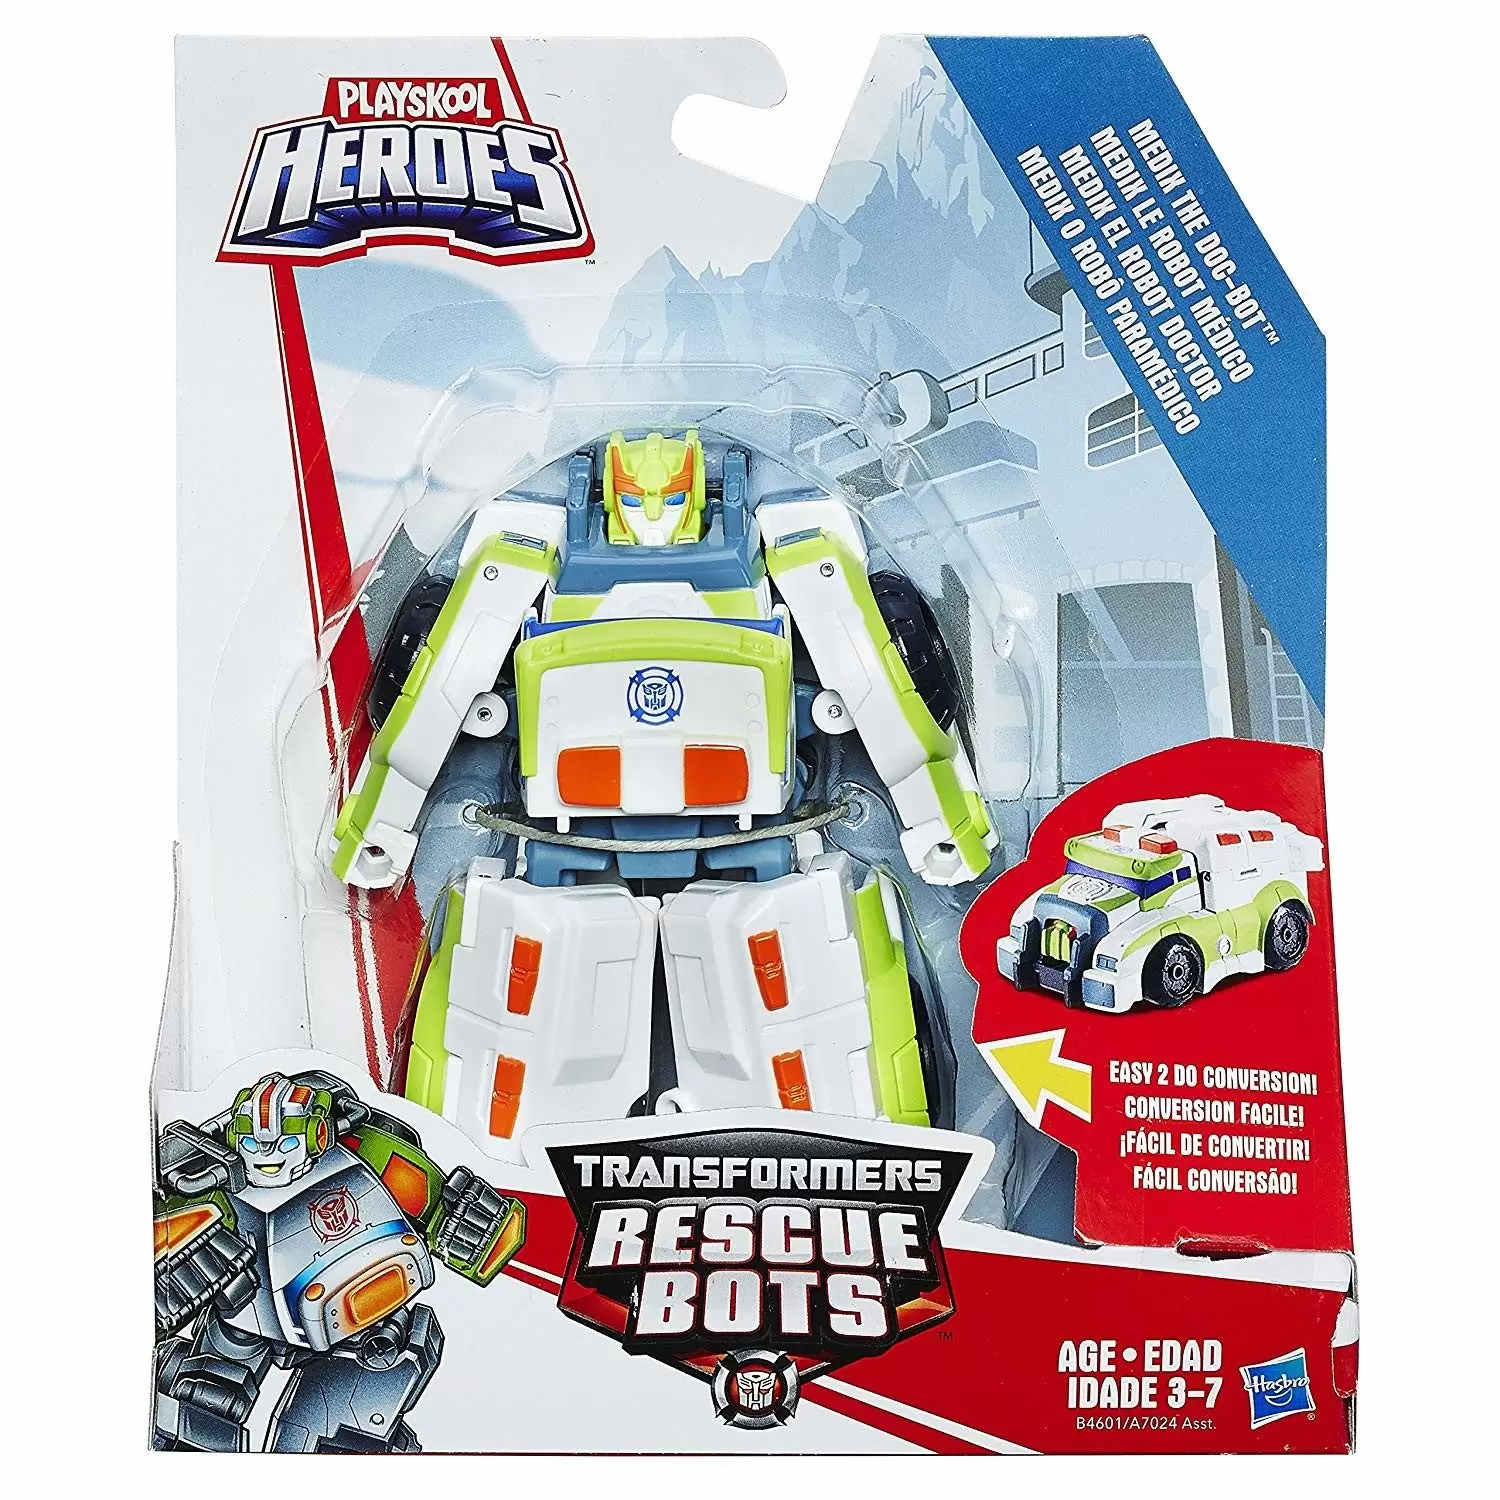 Transformers Rescue Bots - Medix The Doc-Bot